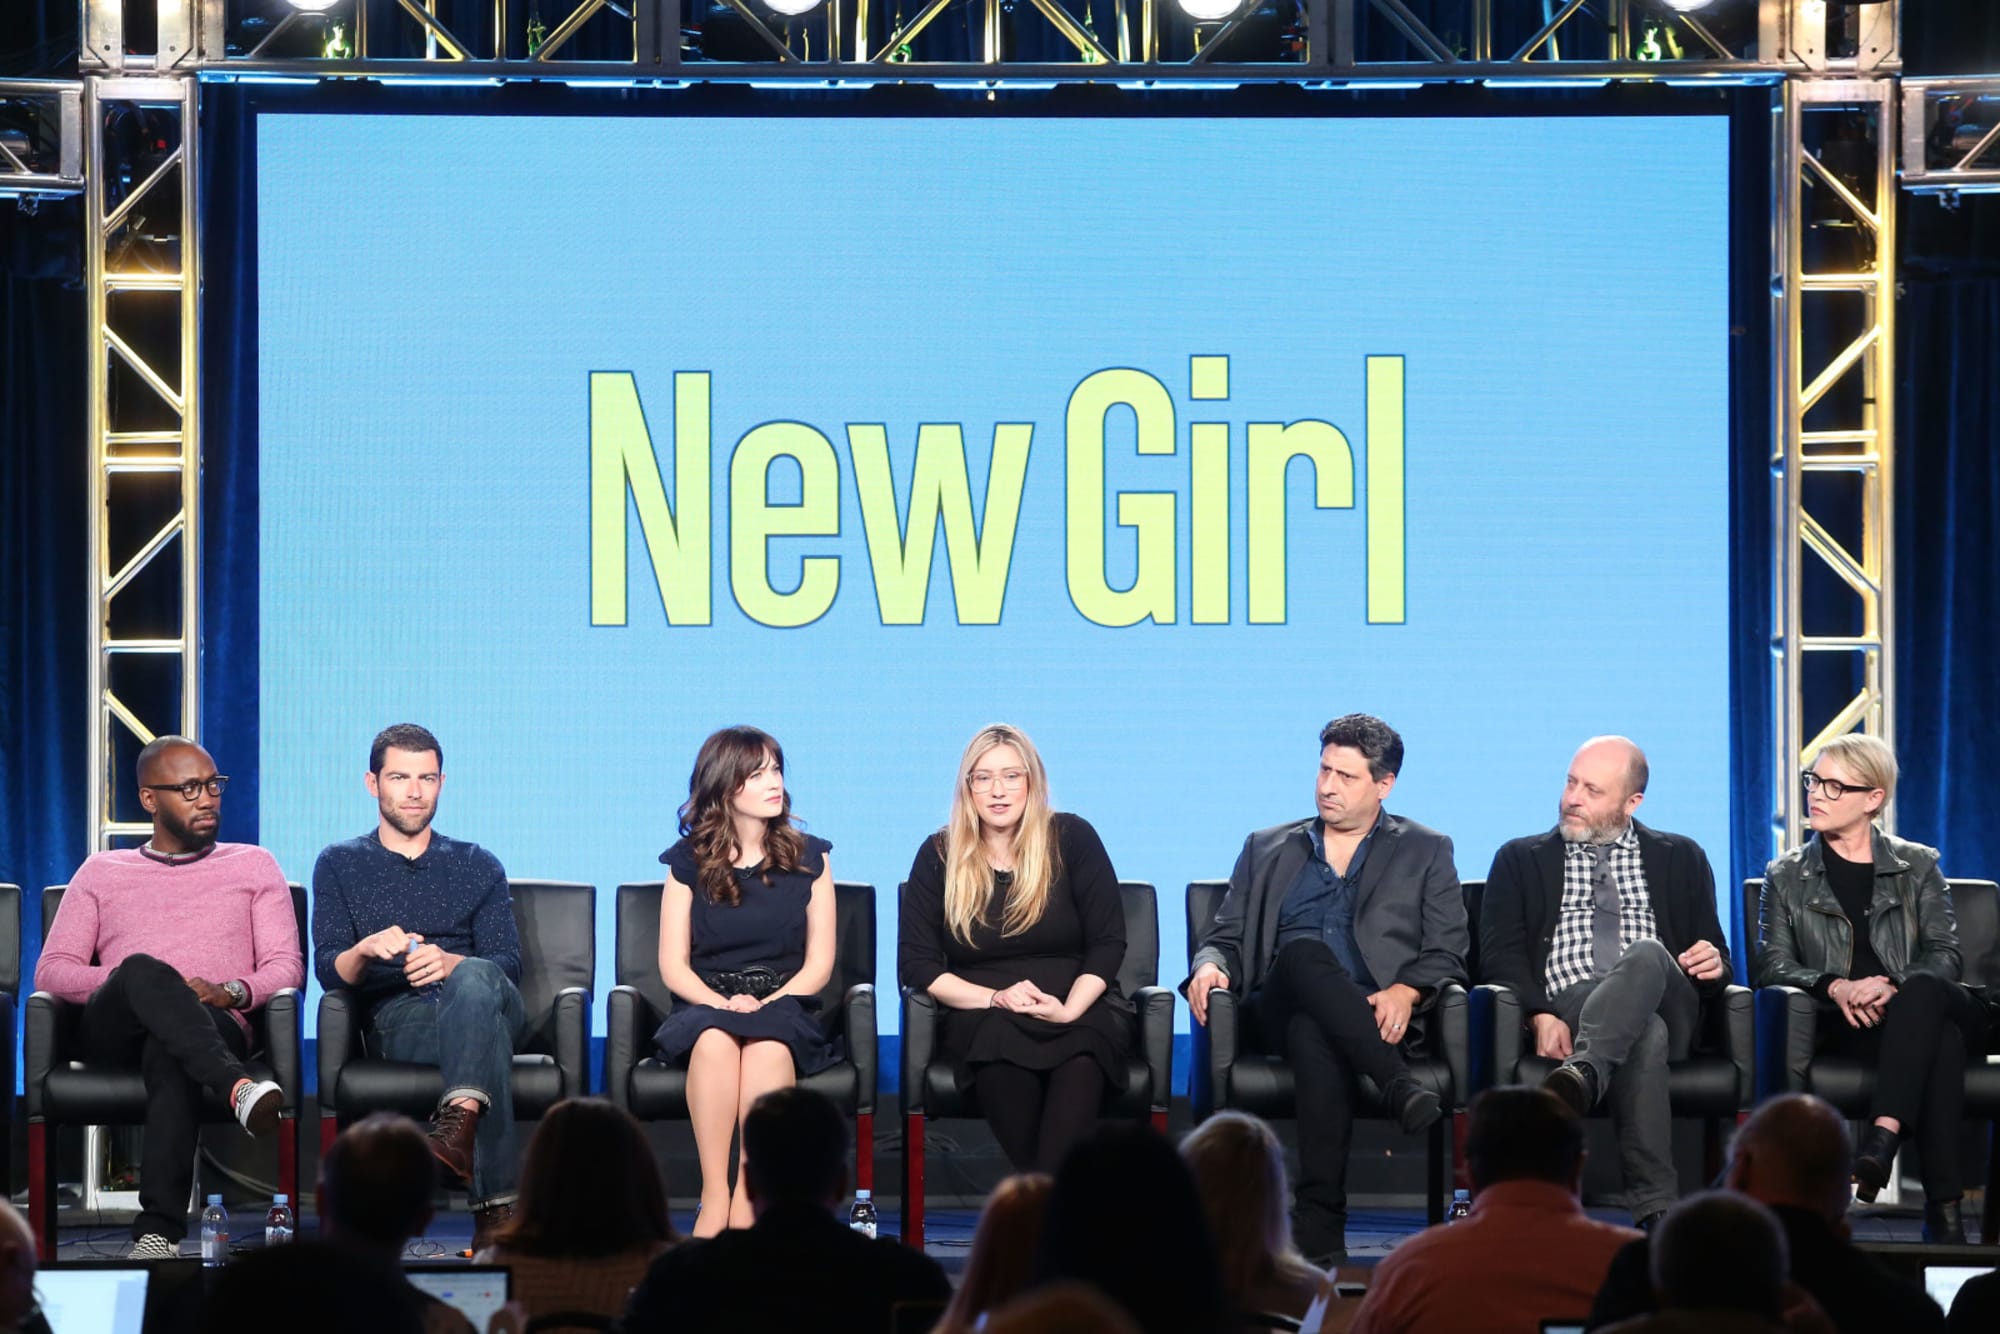 New Girl season 7 premiere live stream 